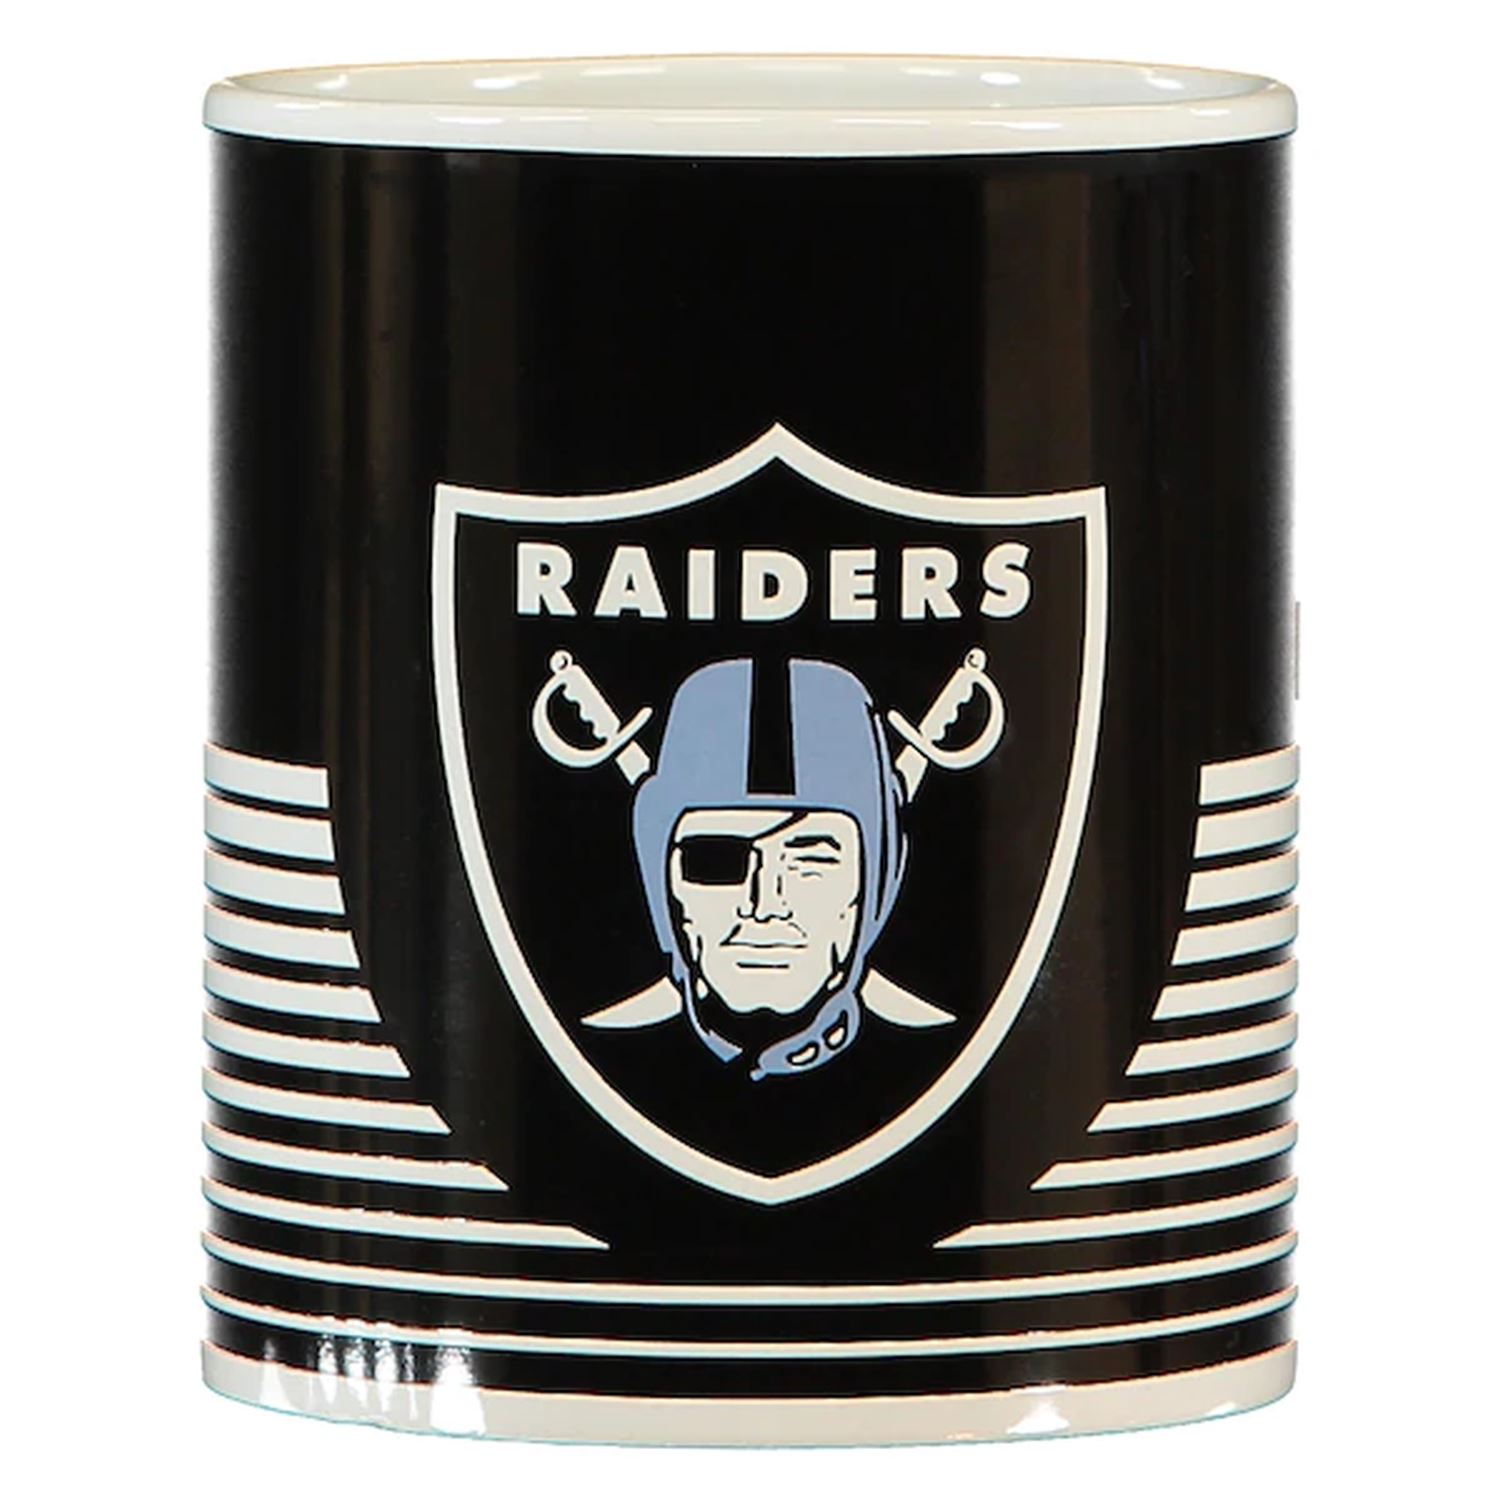 Las Vegas Raiders NFL Linea Mug Black Tasse Forever Collectibles